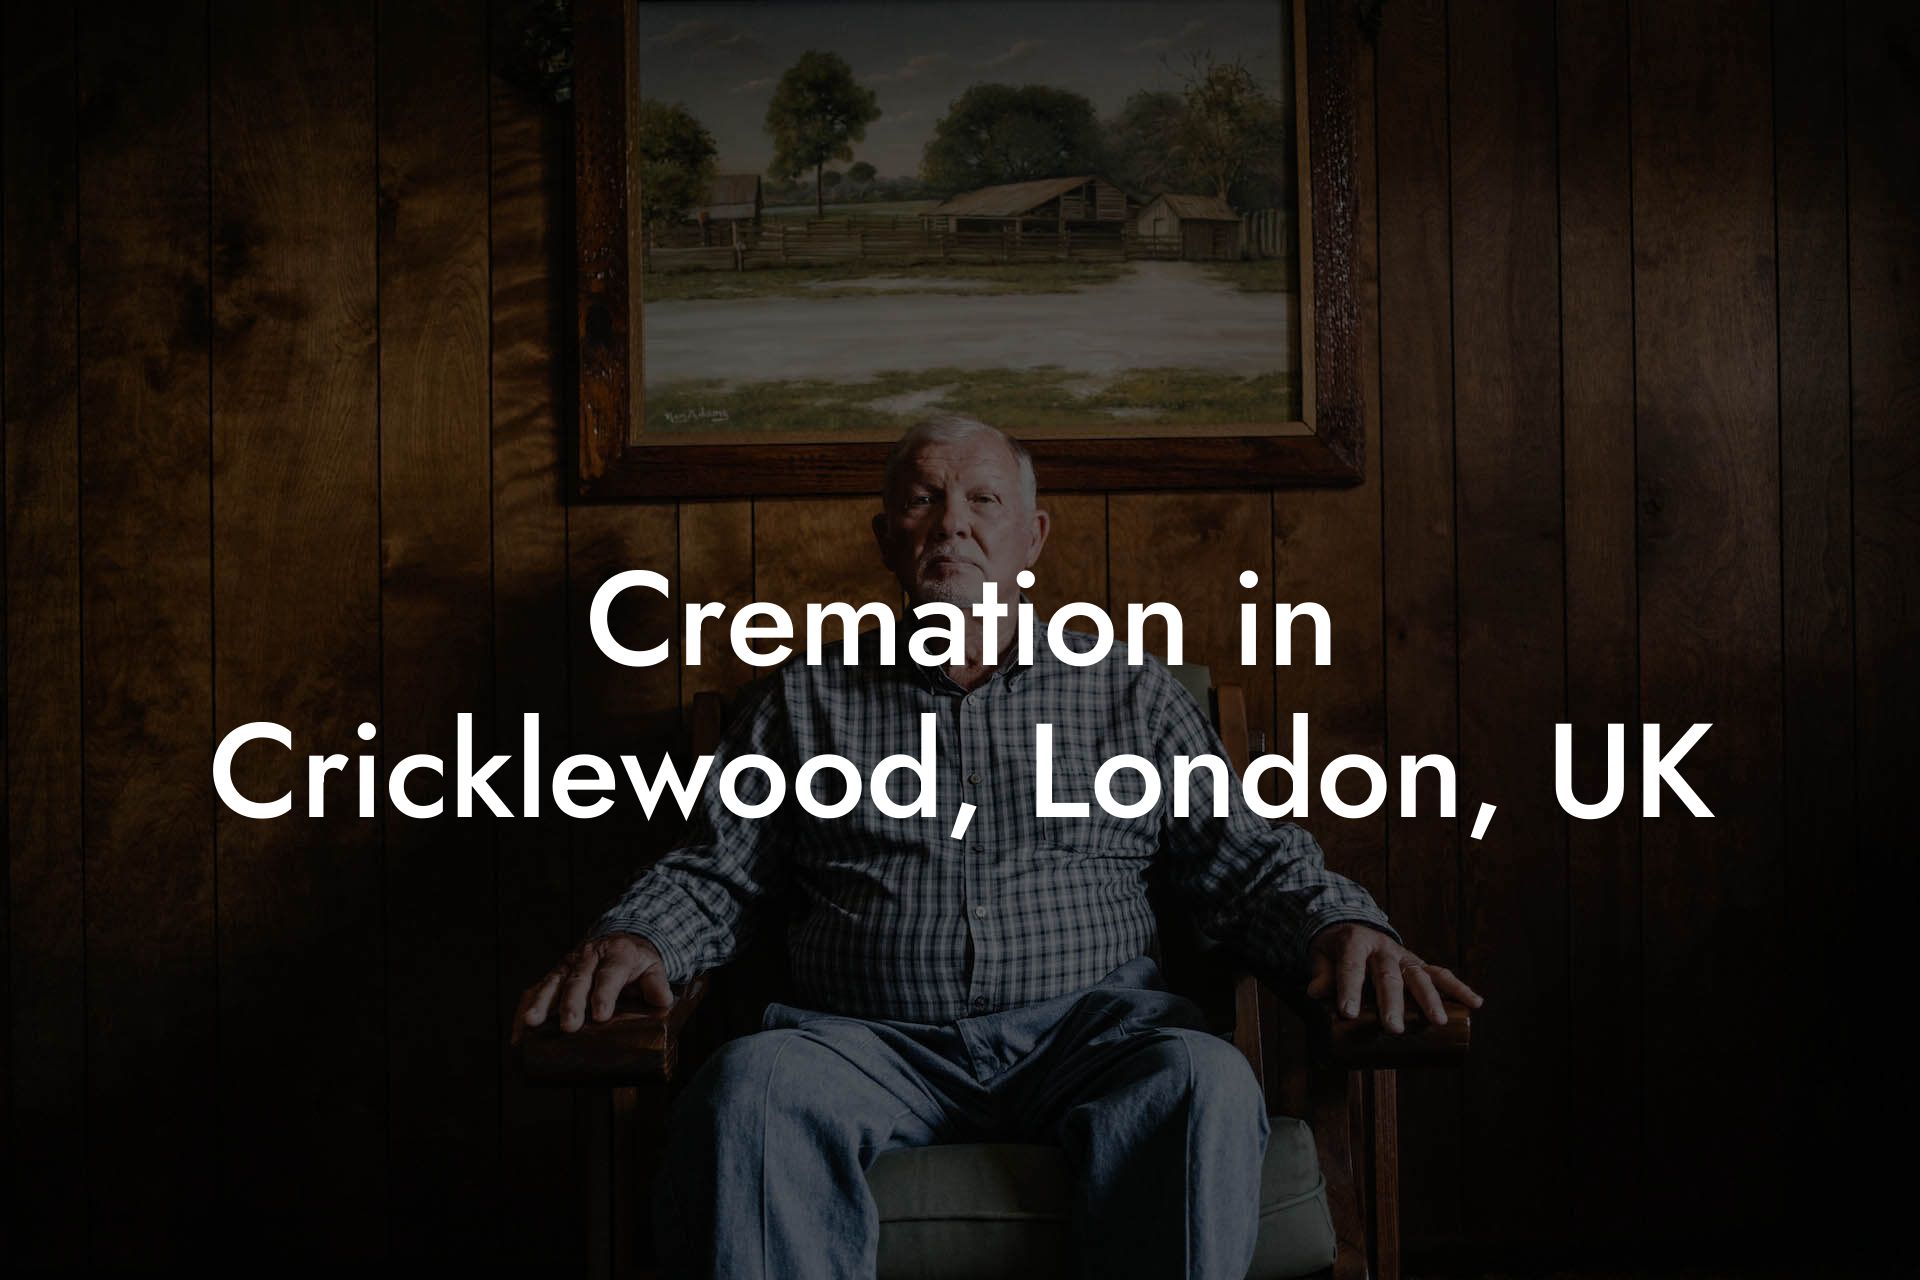 Cremation in Cricklewood, London, UK